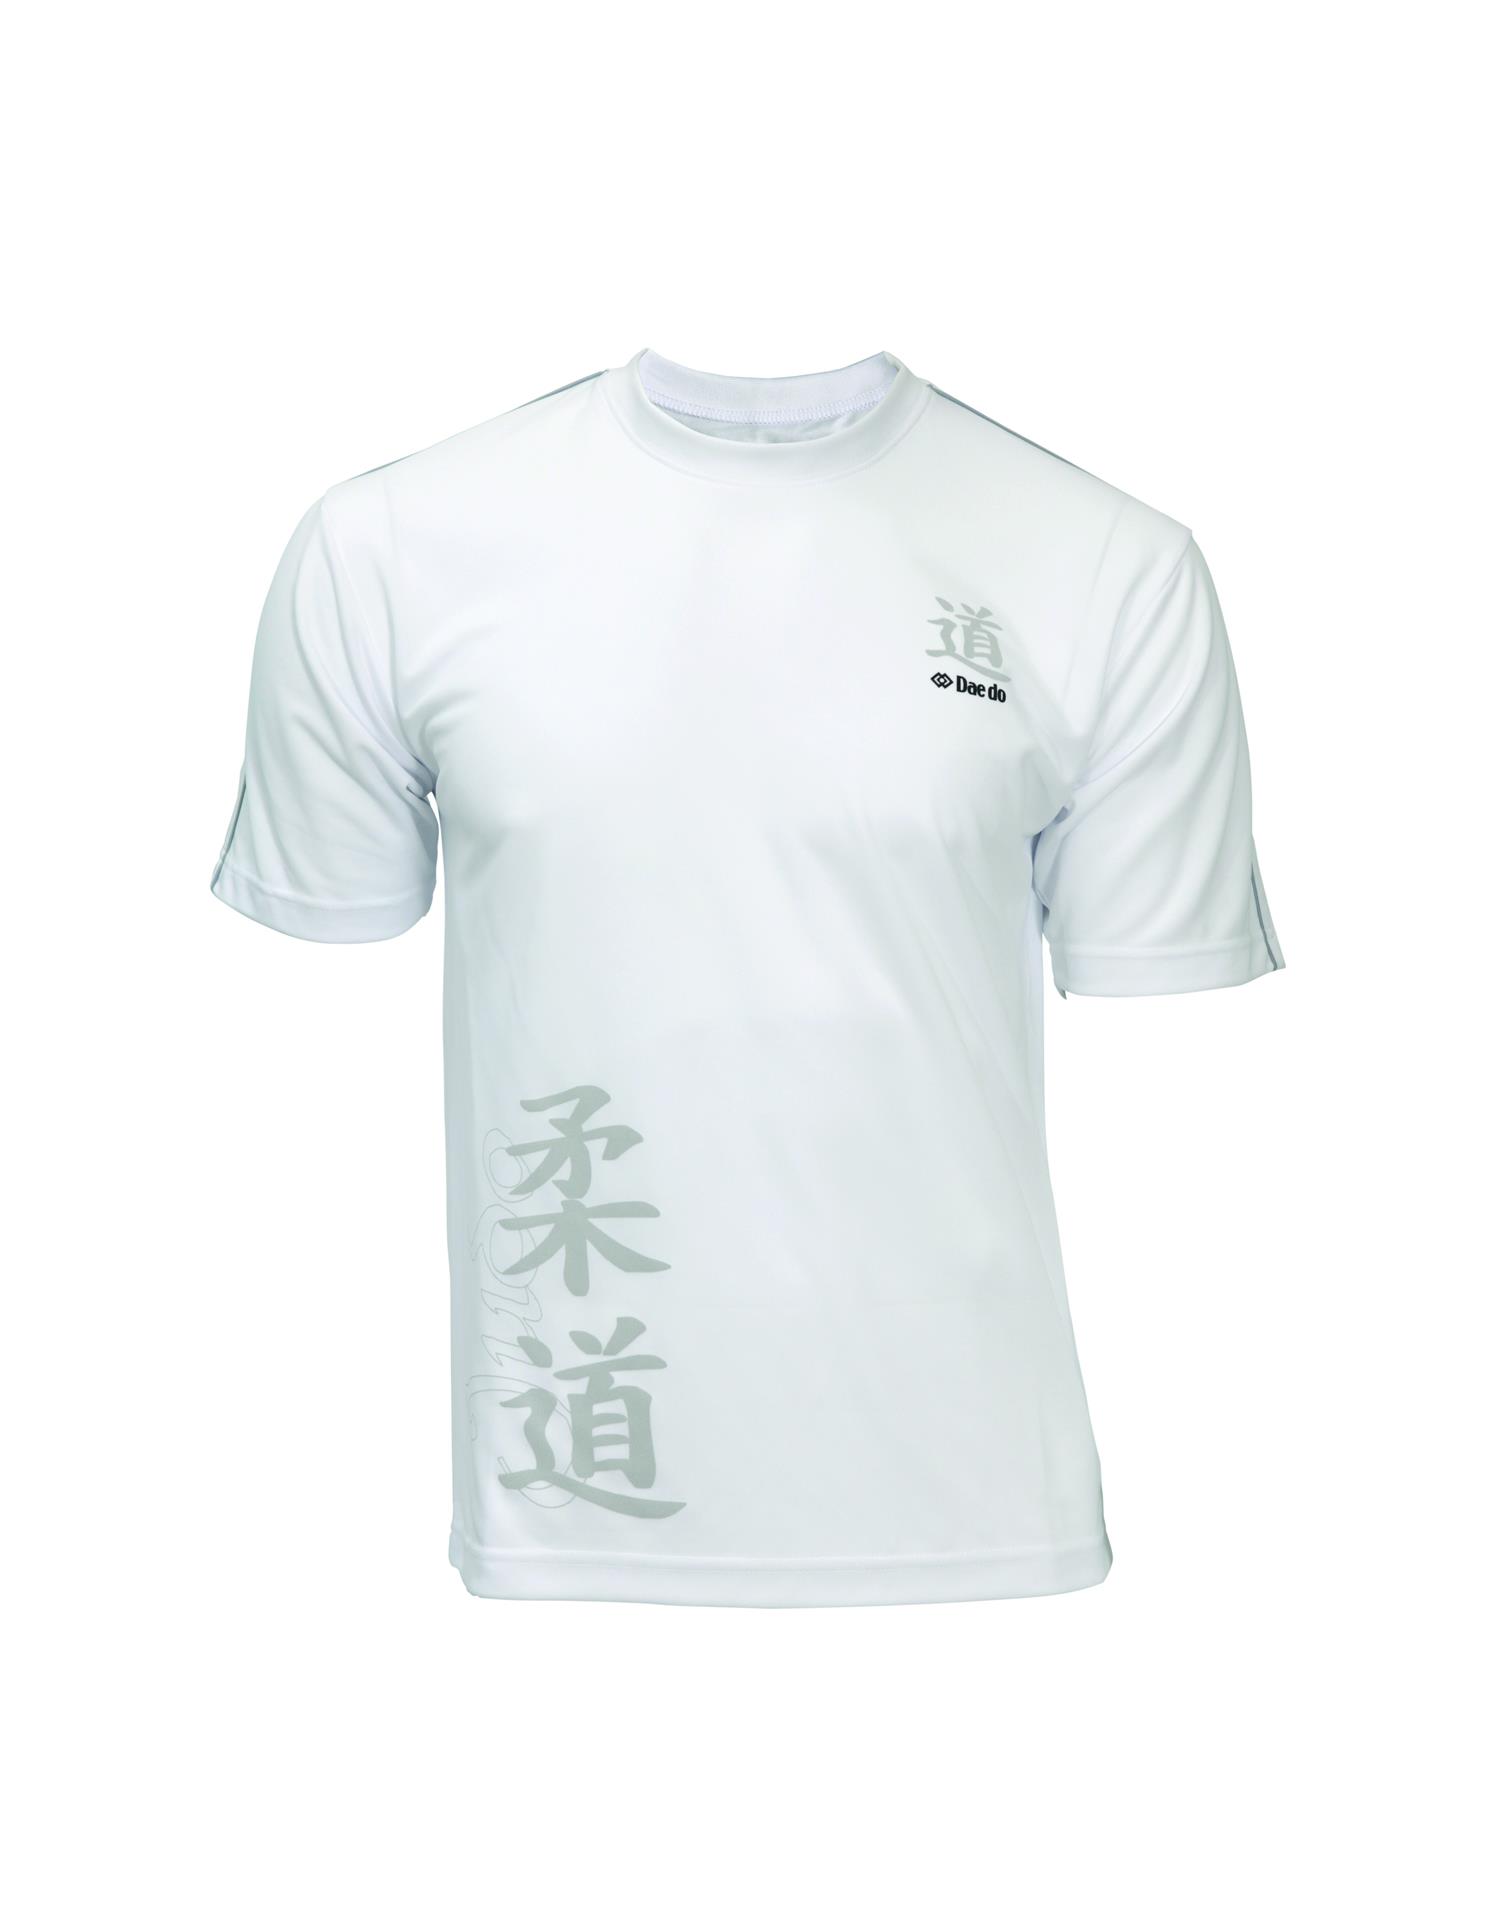 Dae Do T-shirt Judo Hyro Cool Bianco (S - BIANCO)